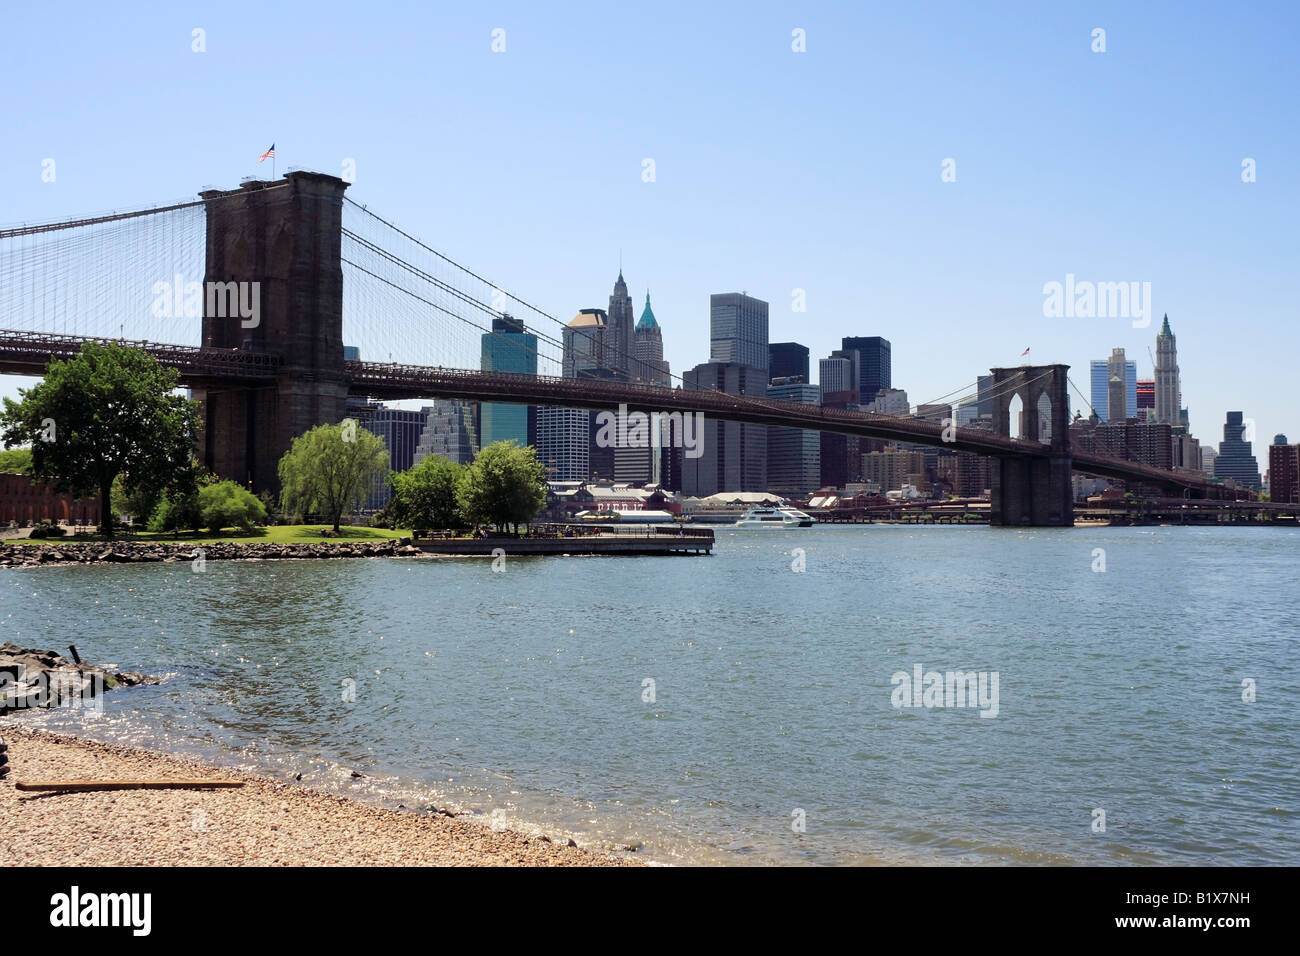 Brooklyn bridge with Manhattan skyline in the background - New York City, USA Stock Photo